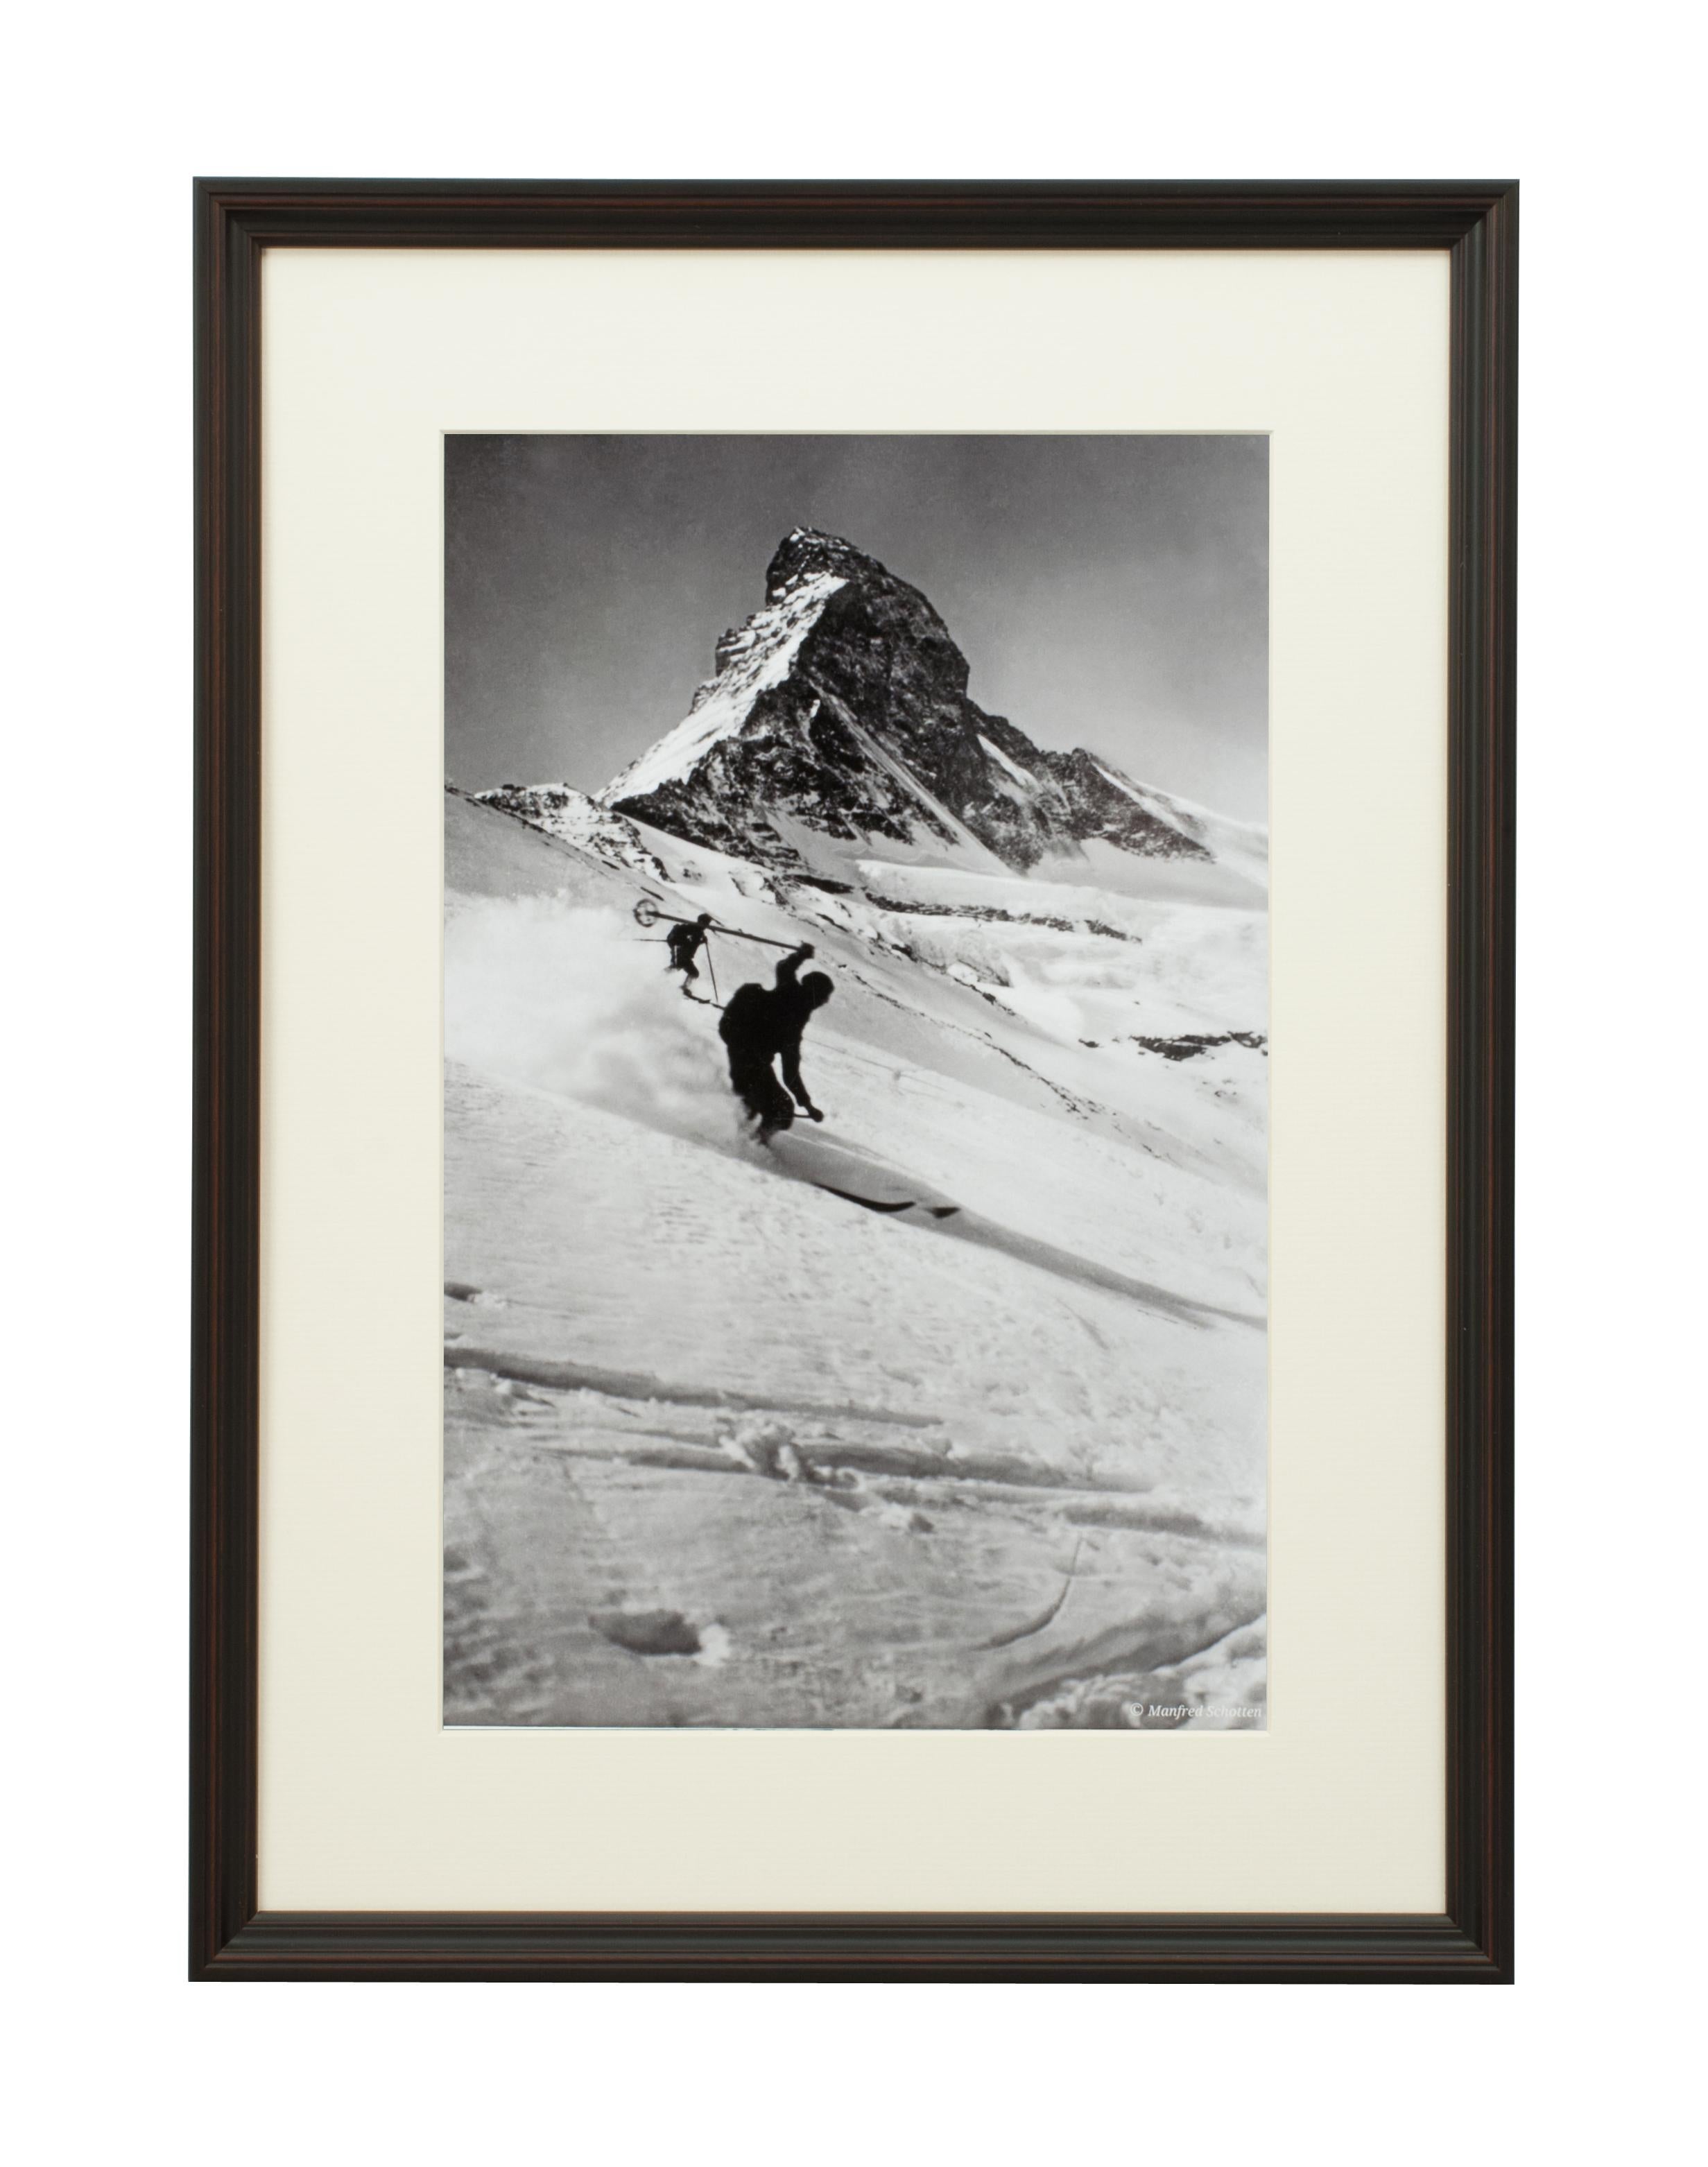 Skifotografie im Vintage-Stil, gerahmte Alpinskifotografie, Matterhorn & Skifahrer.
mATTERHORN & SKIERS